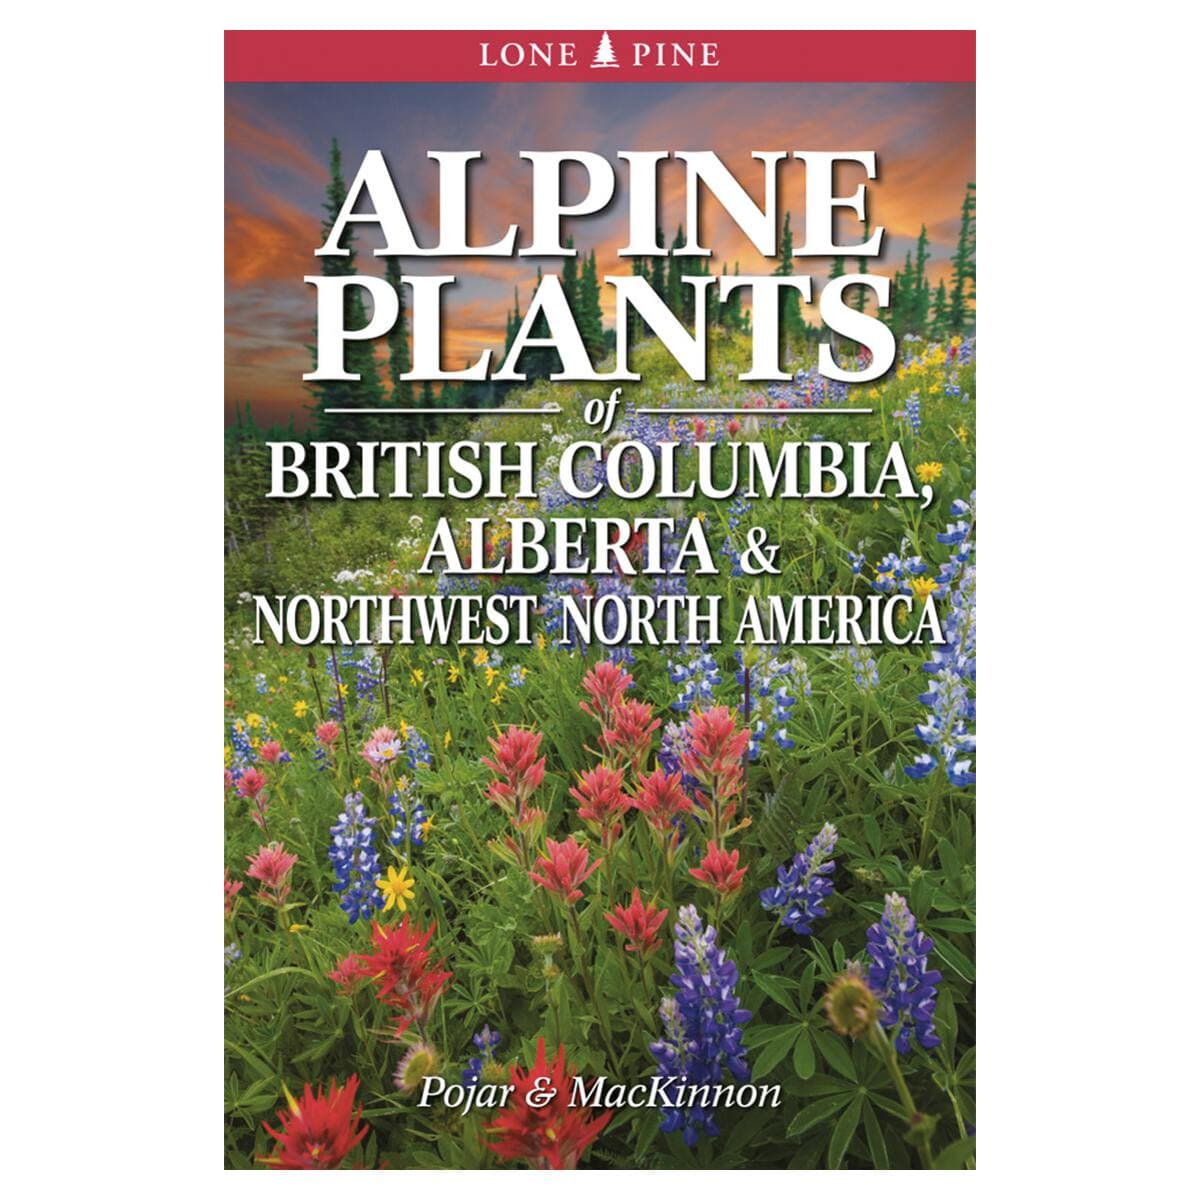 Alpine Plants of British Columbia, Alberta & Northwest North America